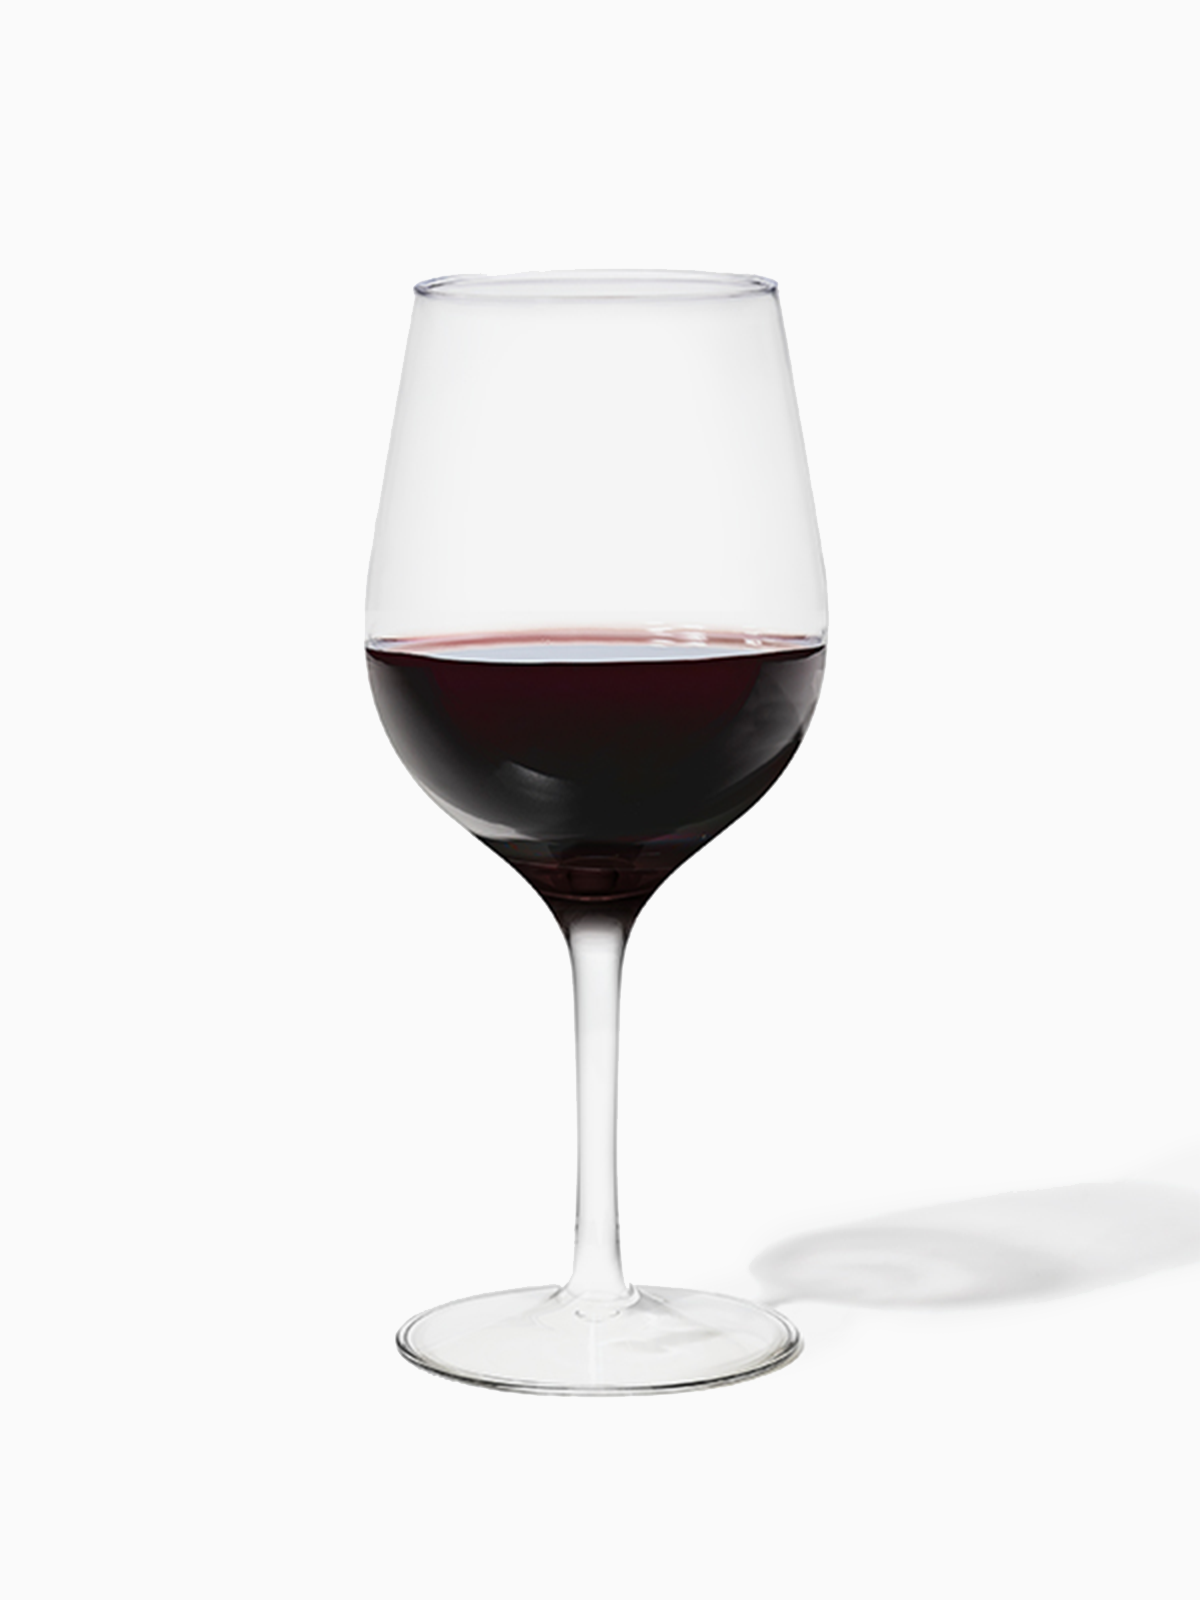 Unbreakable Stemmed Wine Glasses, 12oz- 100% Tritan- Shatterproof,  Reusable, Dishwasher Safe Drink Glassware (Set of 8)- Indoor Outdoor  Drinkware 